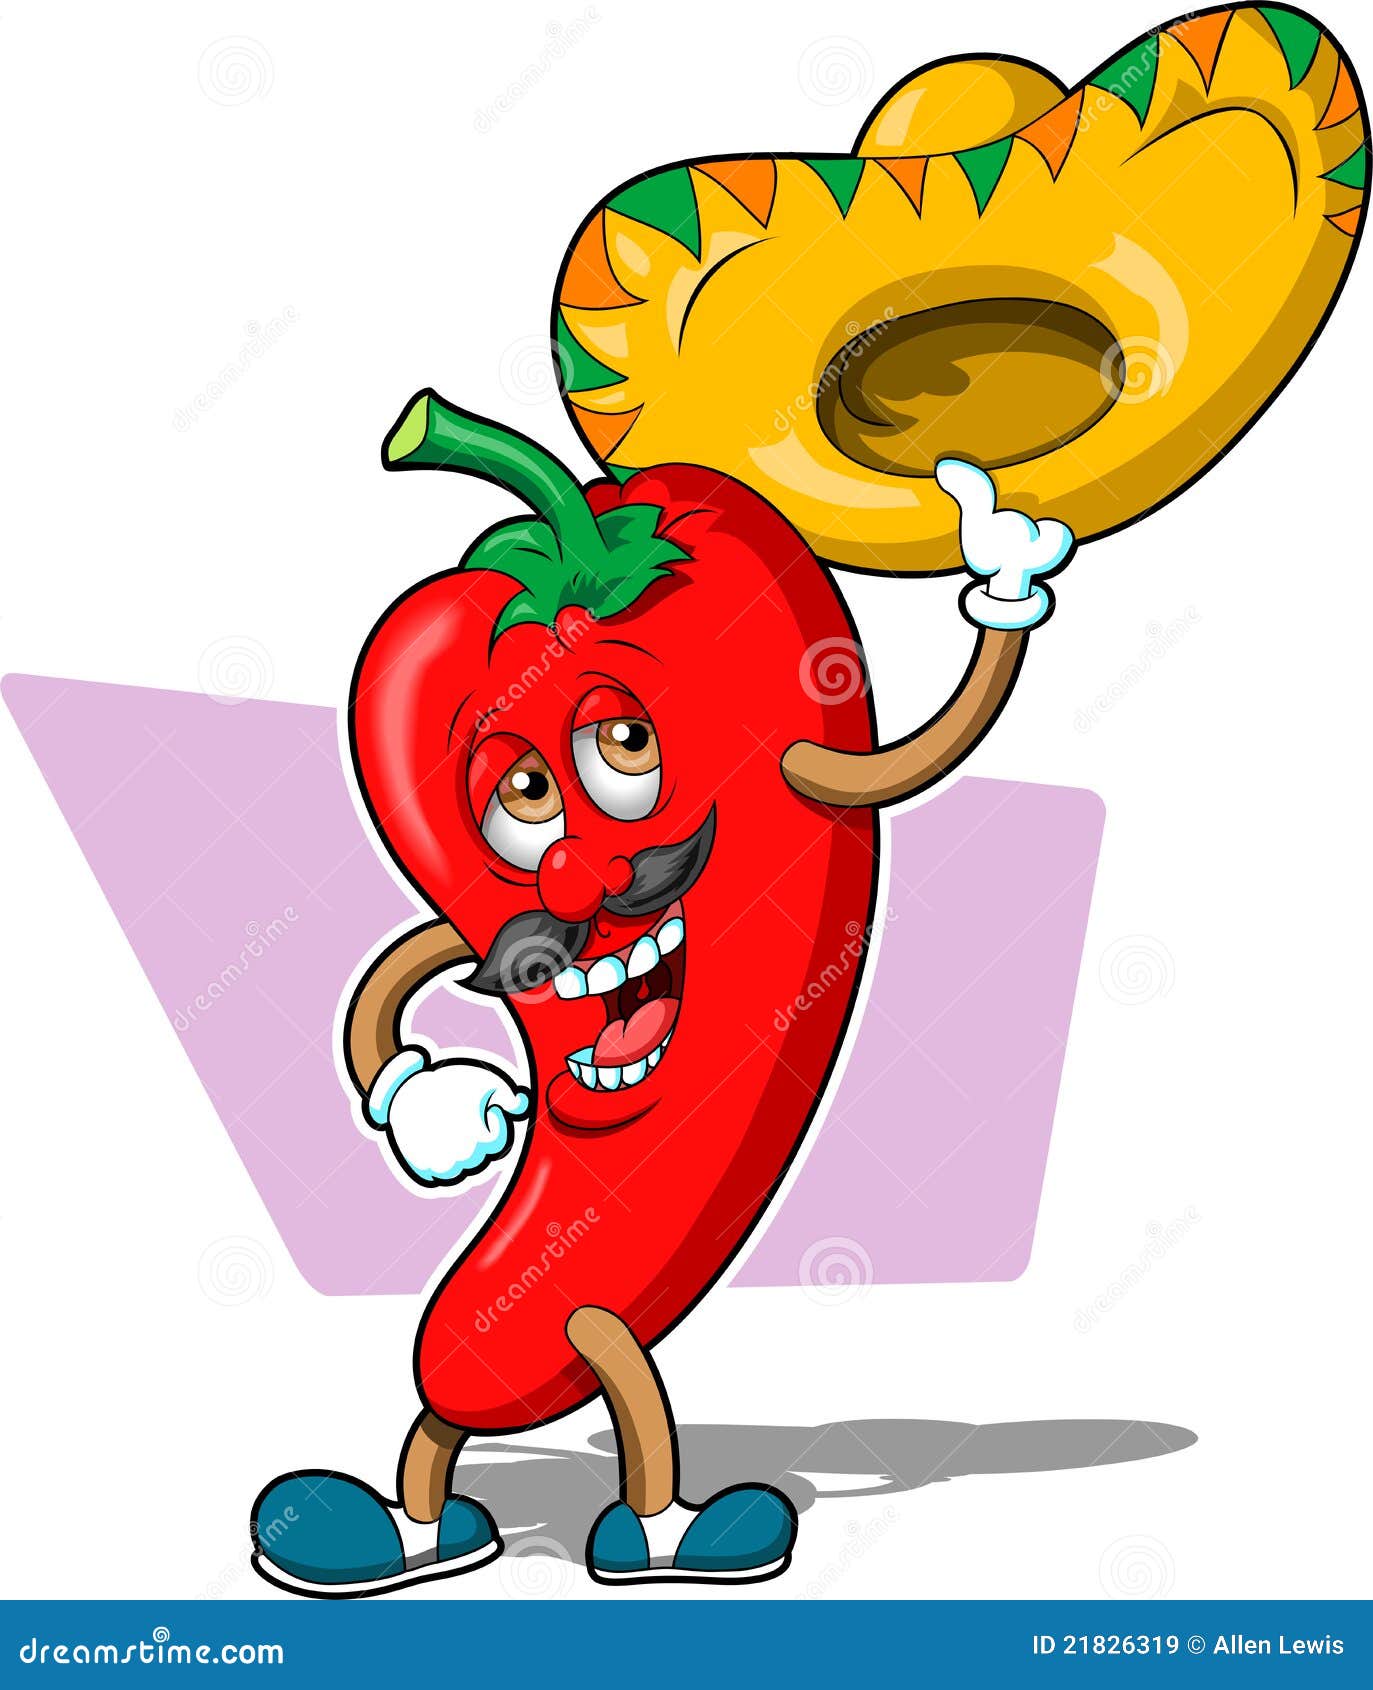 Chili Pepper Guy stock vector. Illustration of taco, humor - 21826319